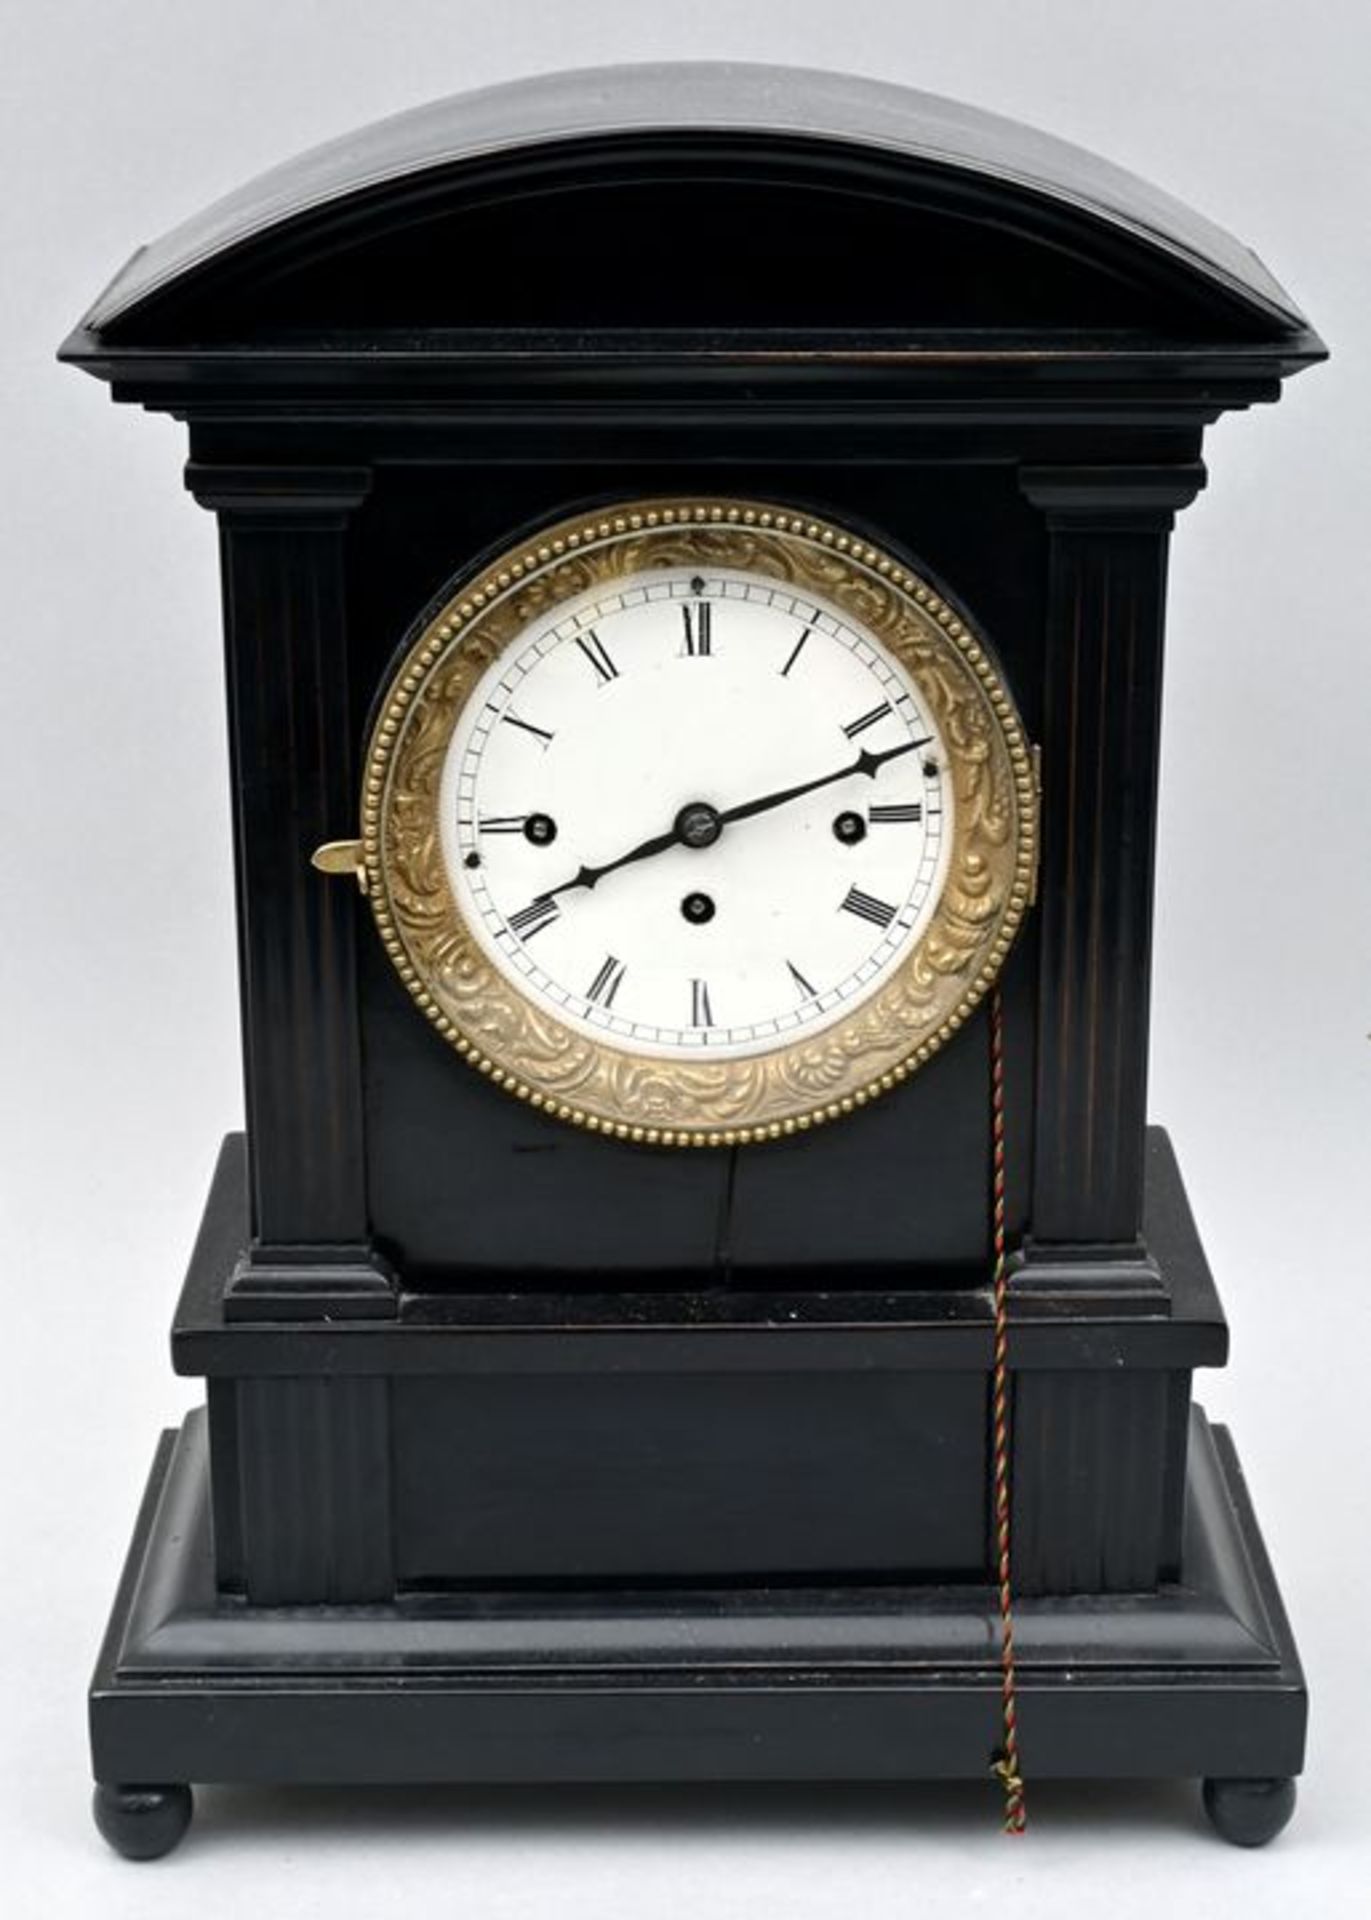 Stockuhr / Bracket clock